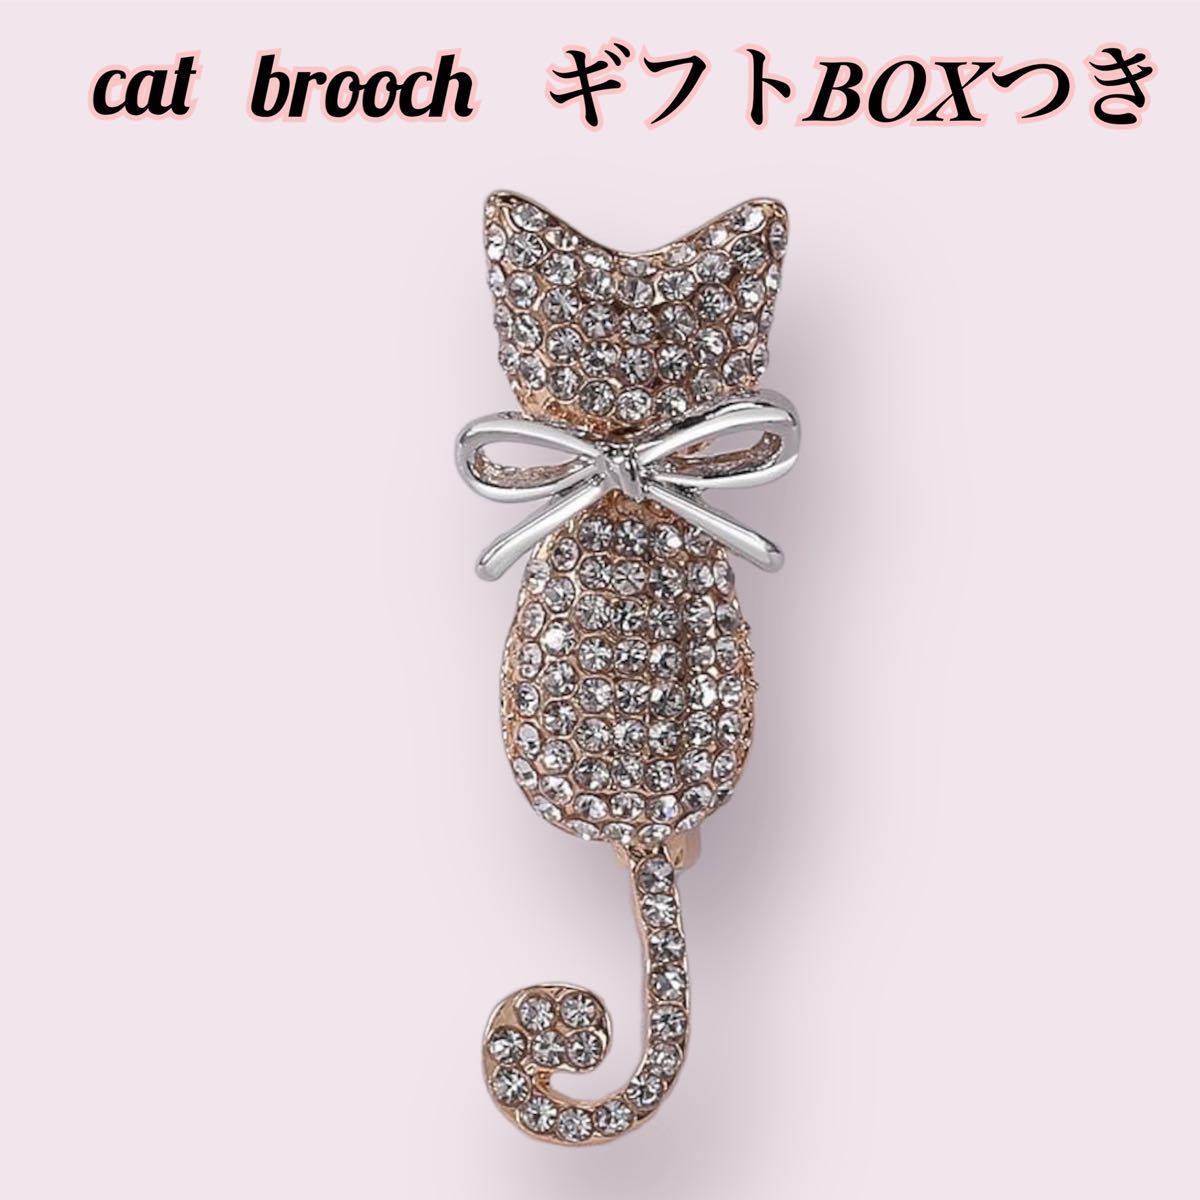 【SALE】ミニ猫ちゃん ブローチ プレゼント ギフト